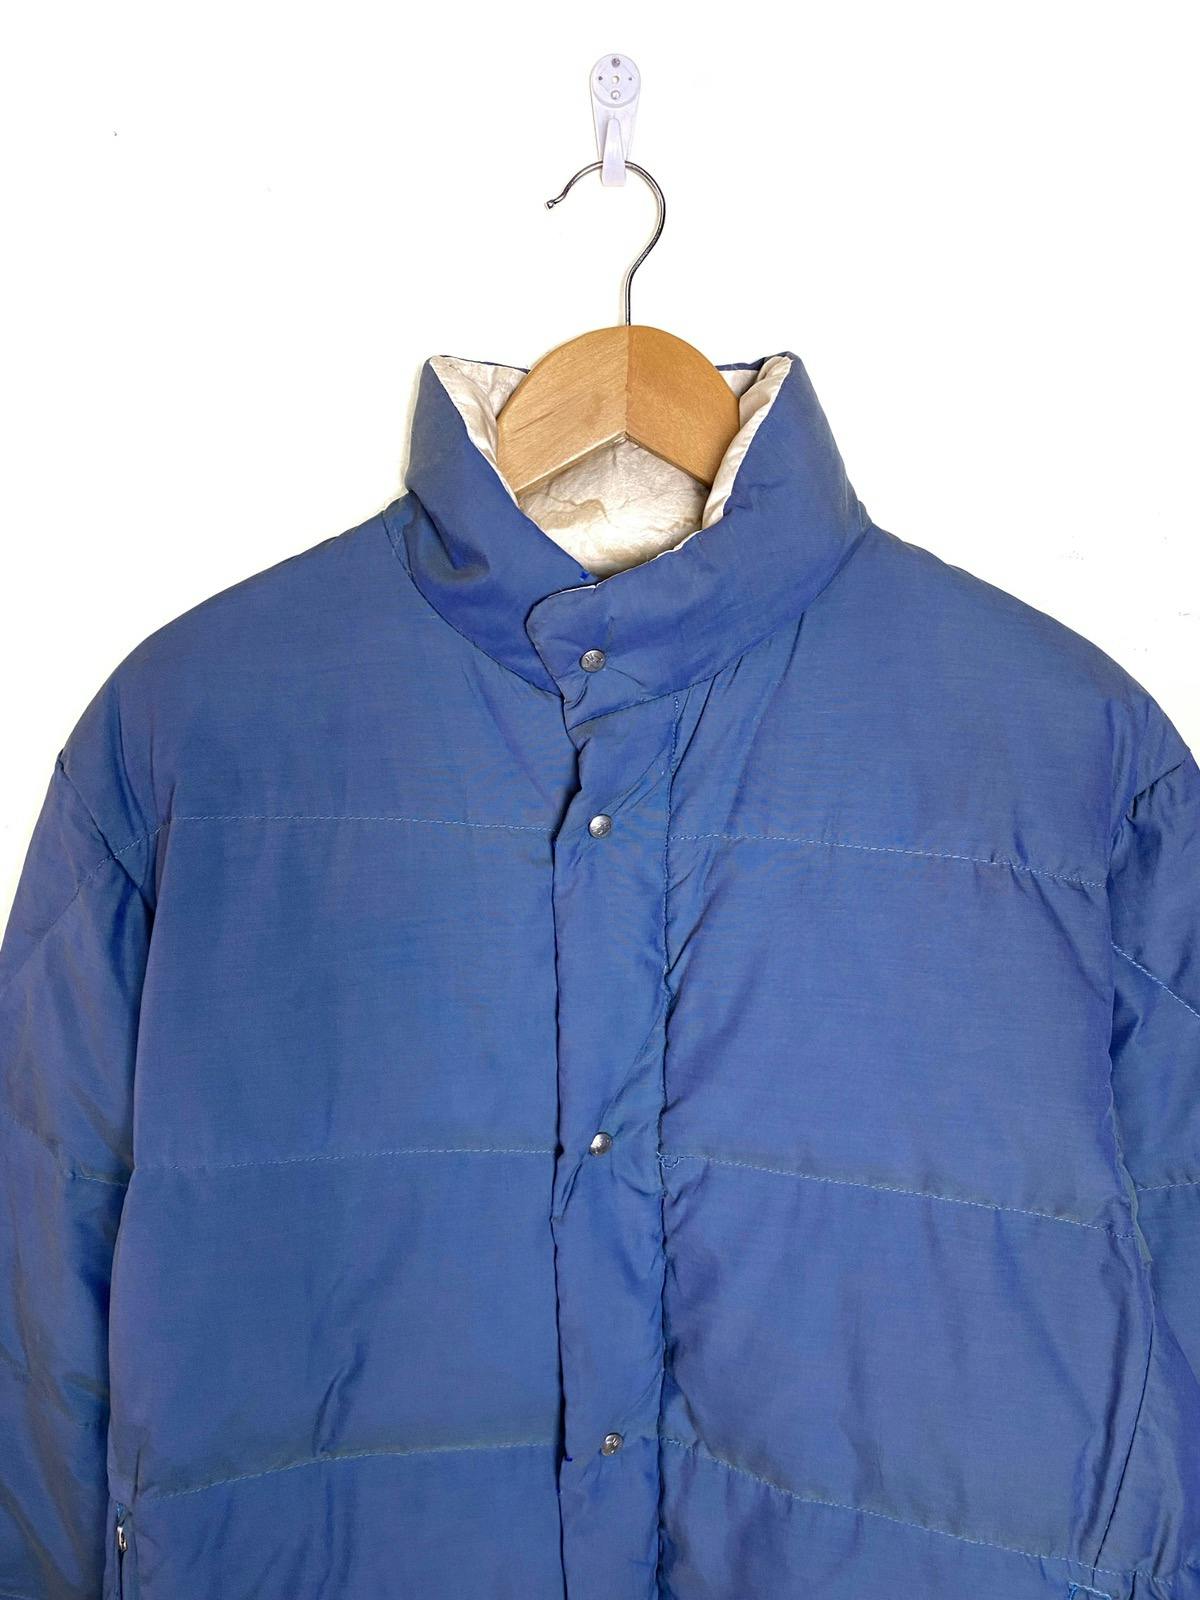 Vintage Moncler Puffer Down Jacket - 2